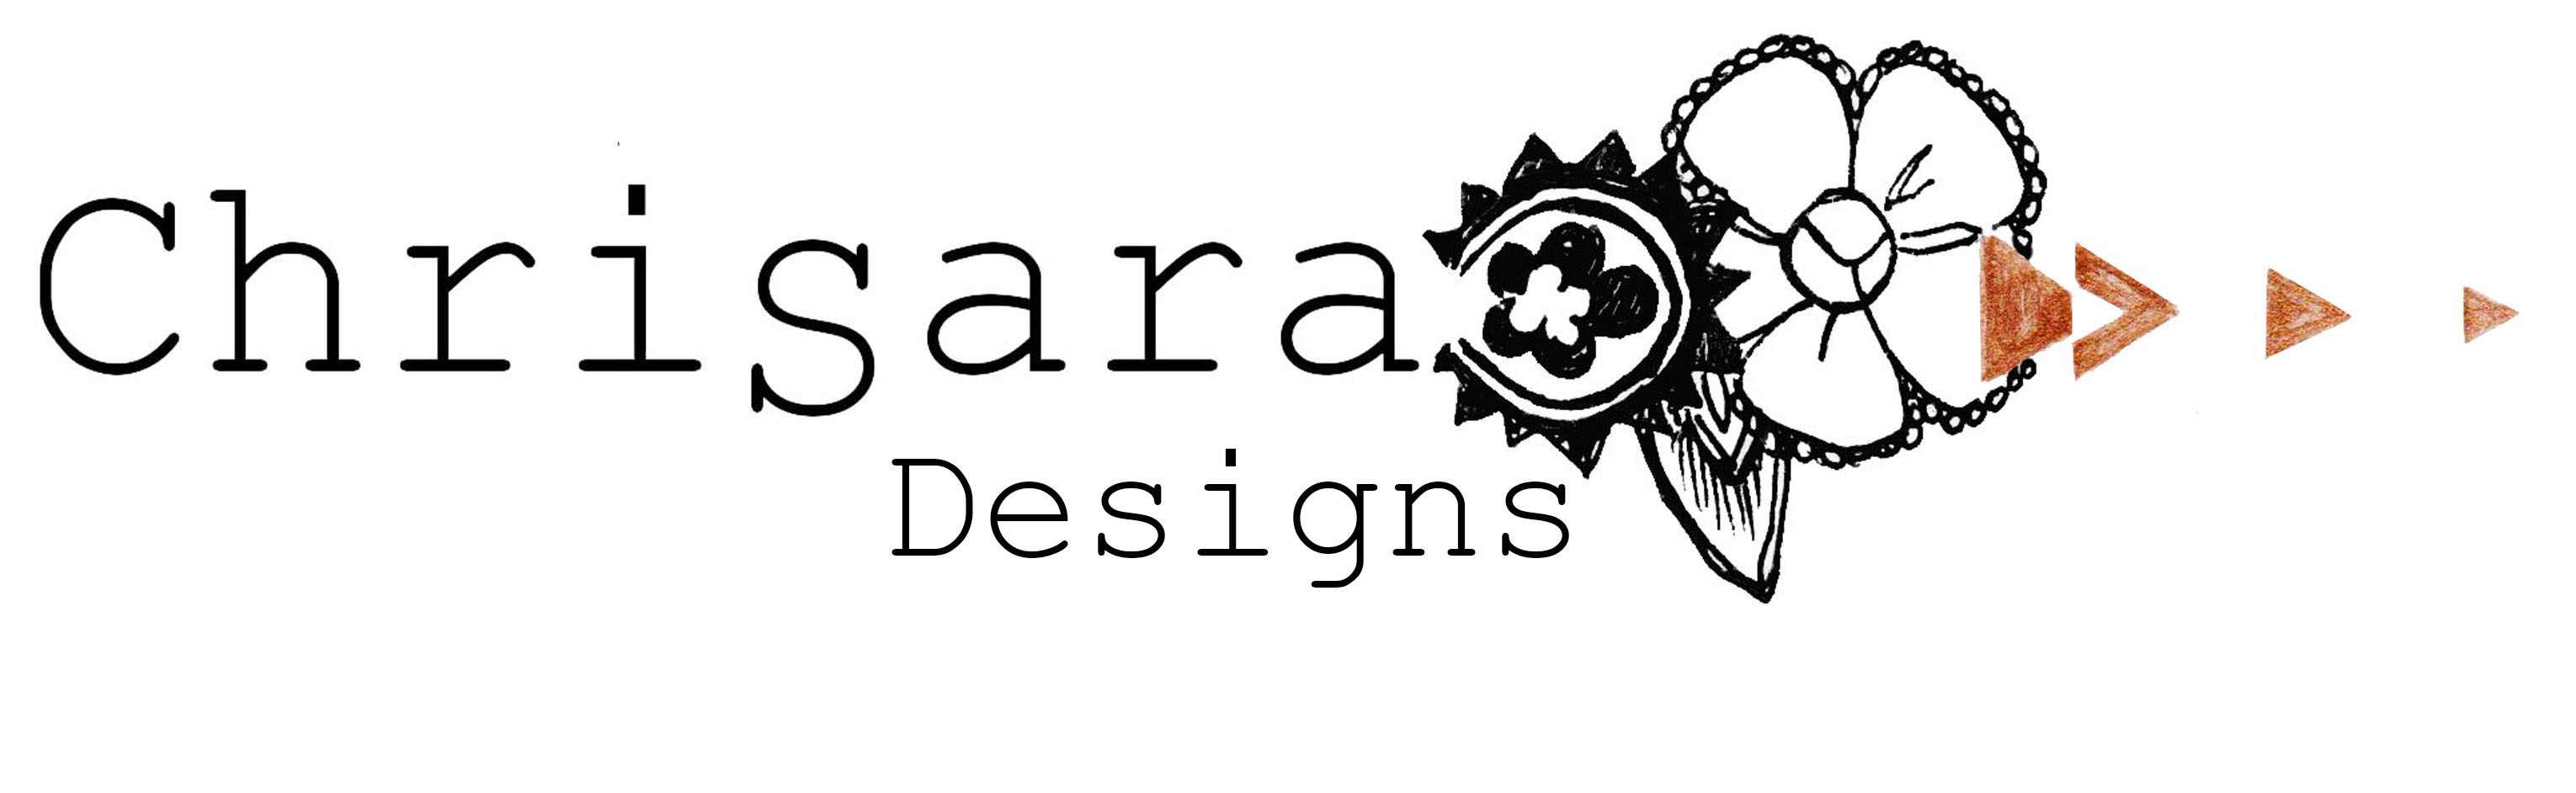 Chrisara Designs